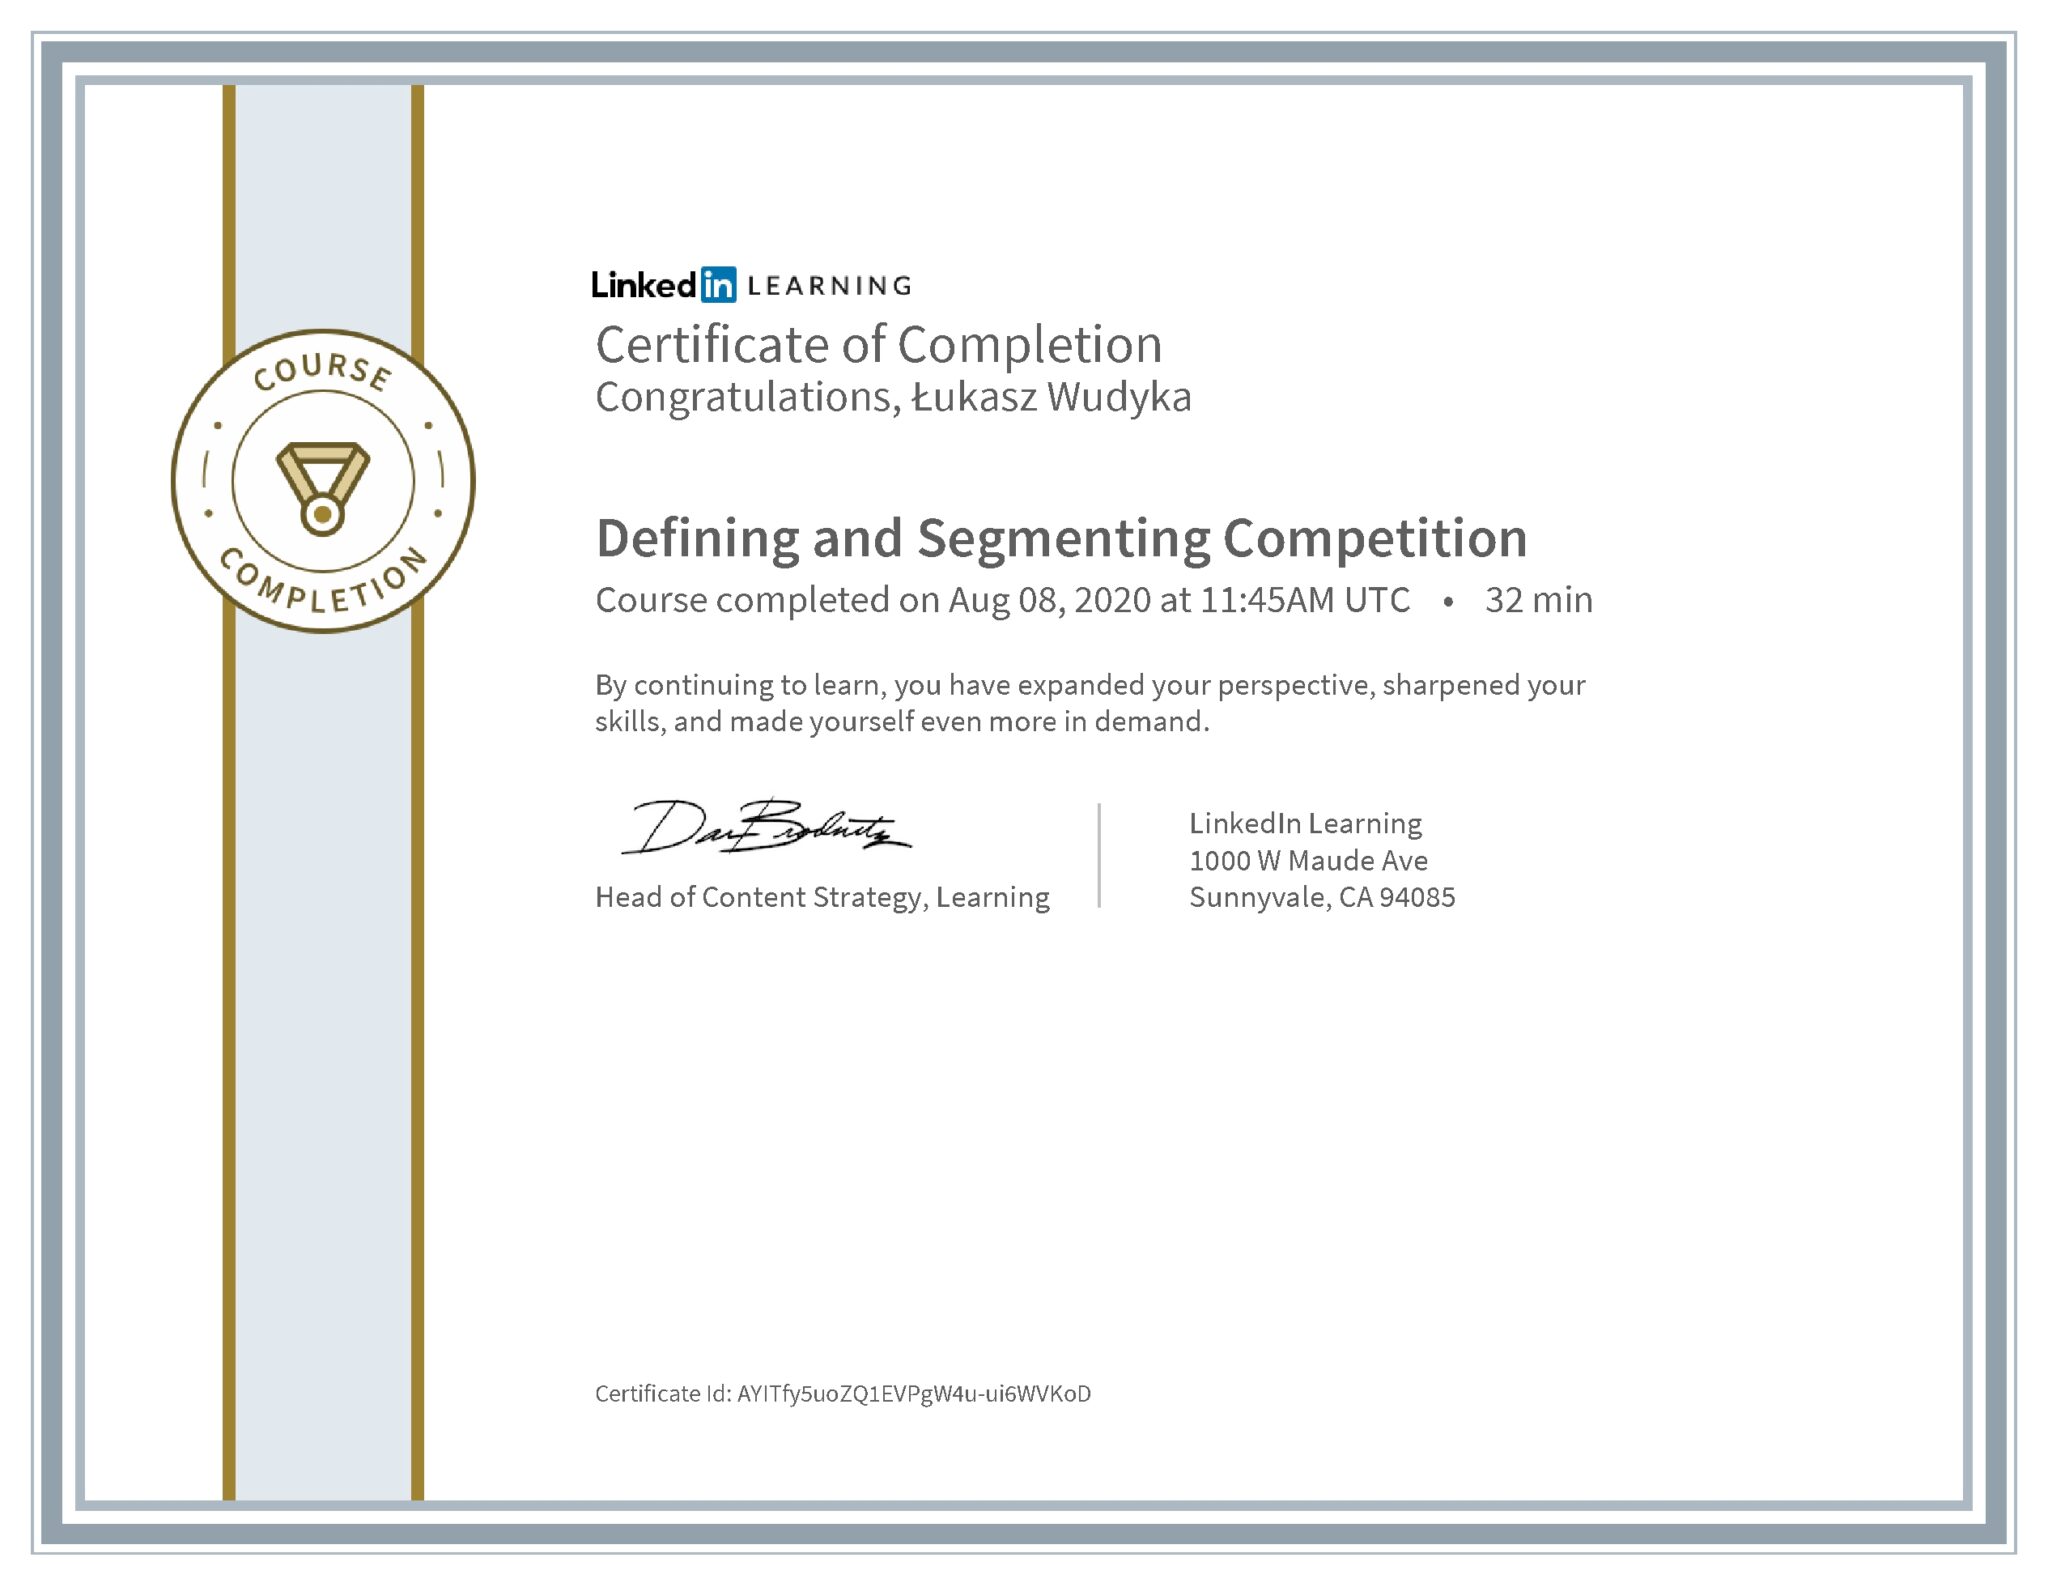 Łukasz Wudyka certyfikat LinkedIn Defining and Segmenting Competition